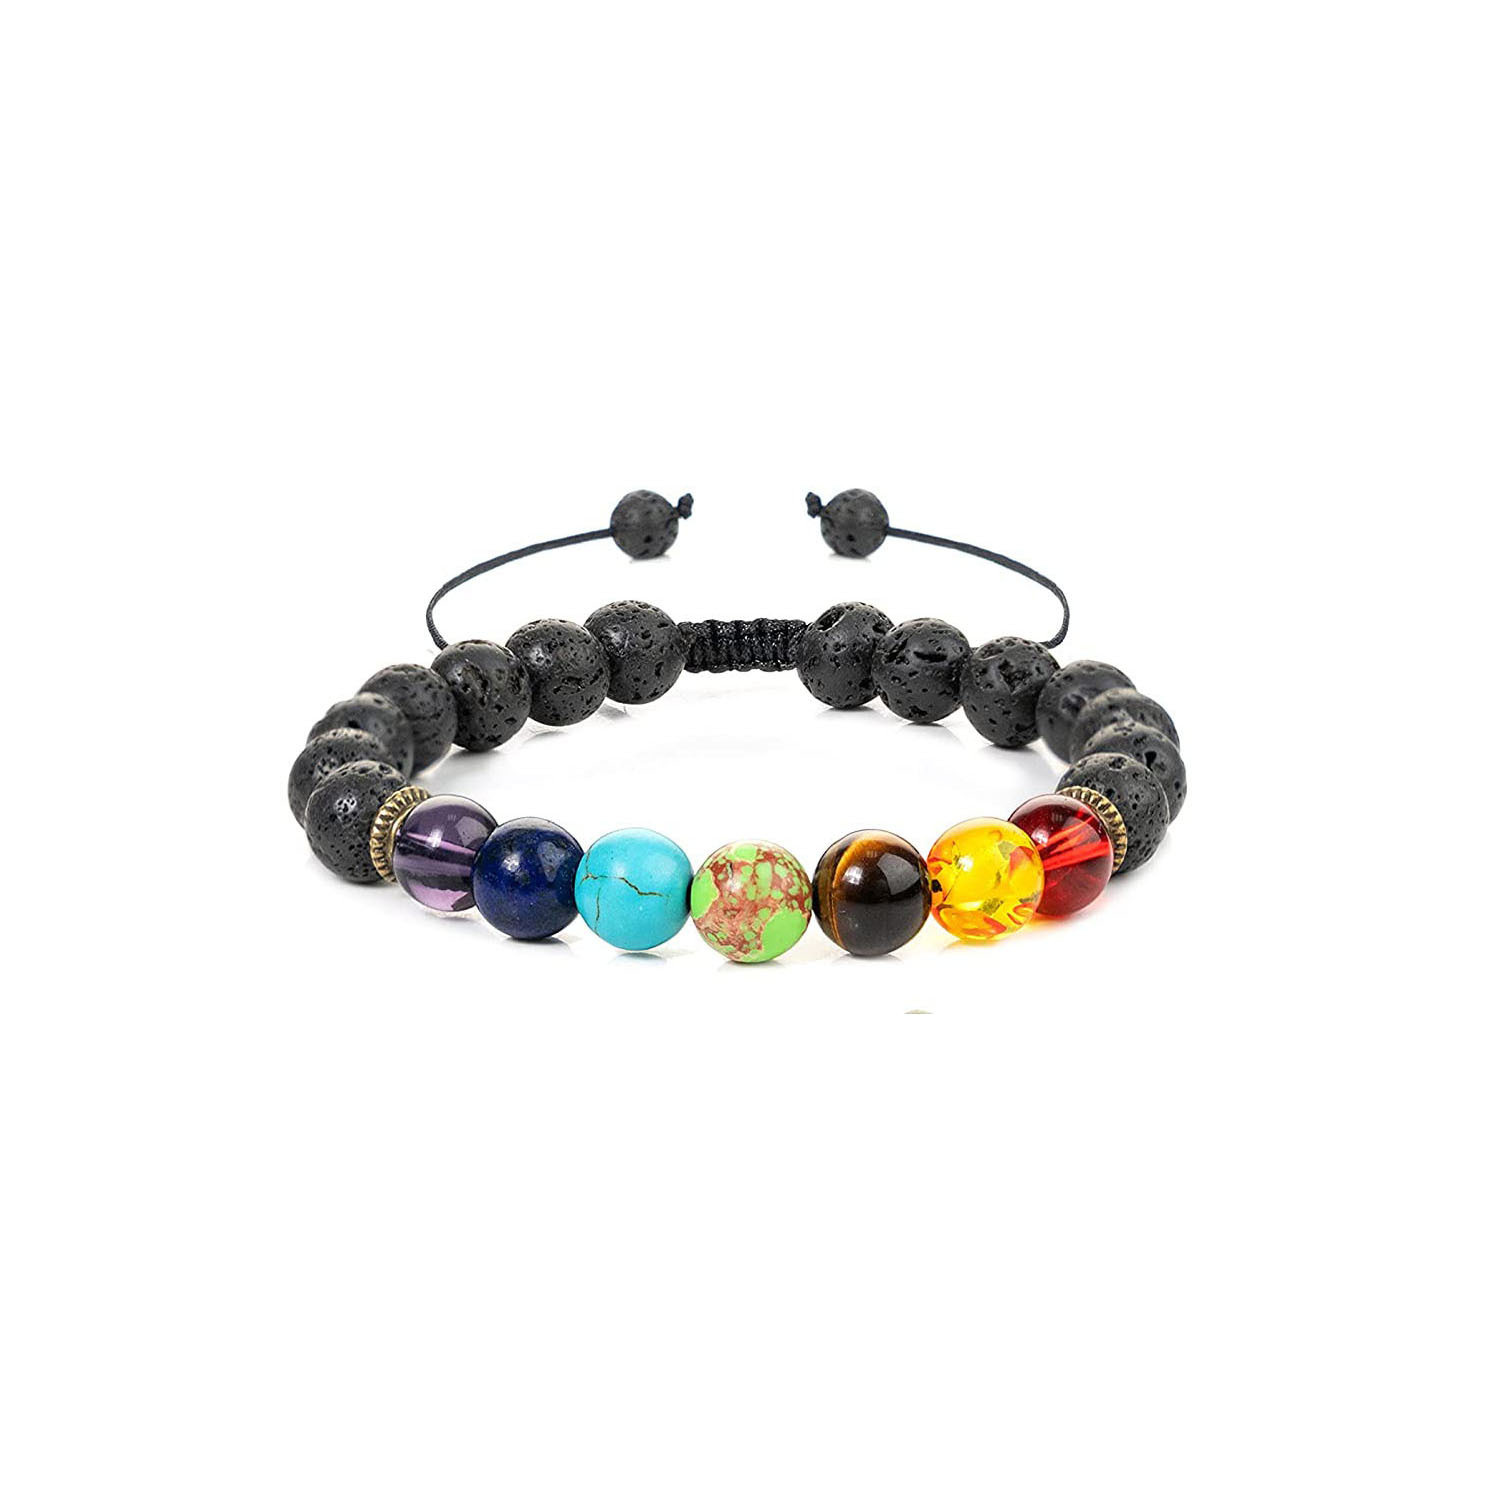 1:colorful bracelet